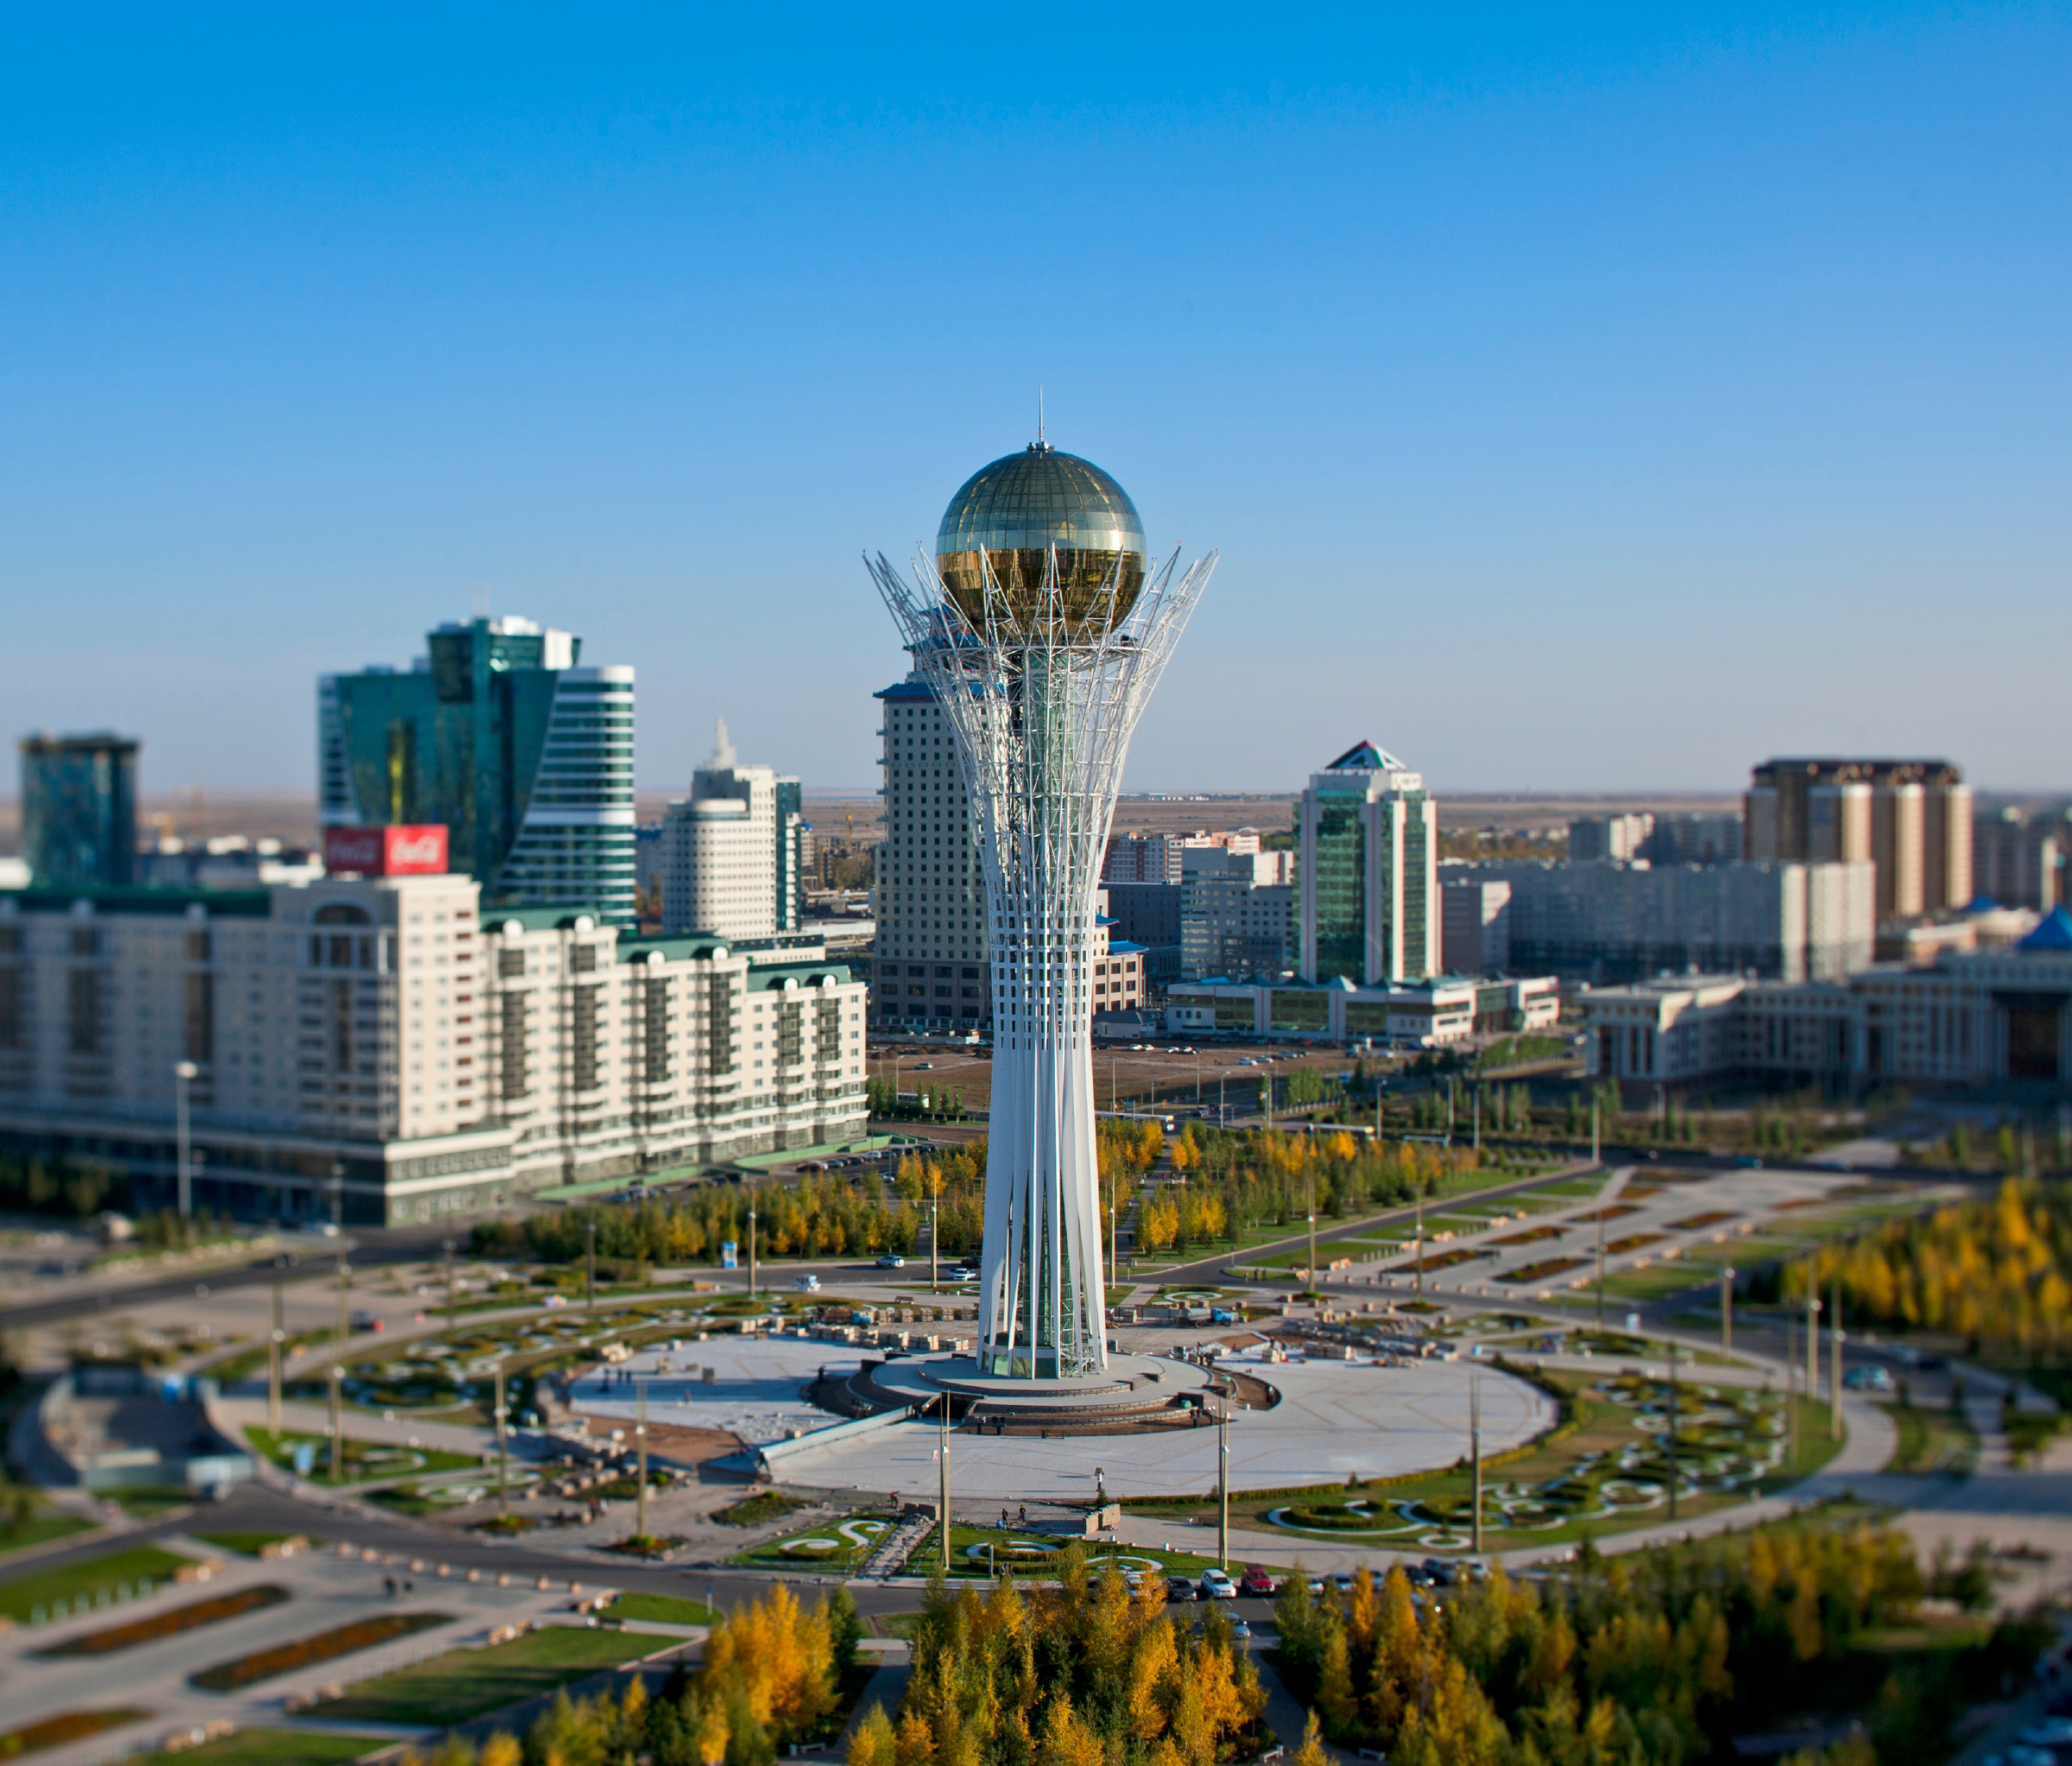 astana kazakhstan tourist attractions